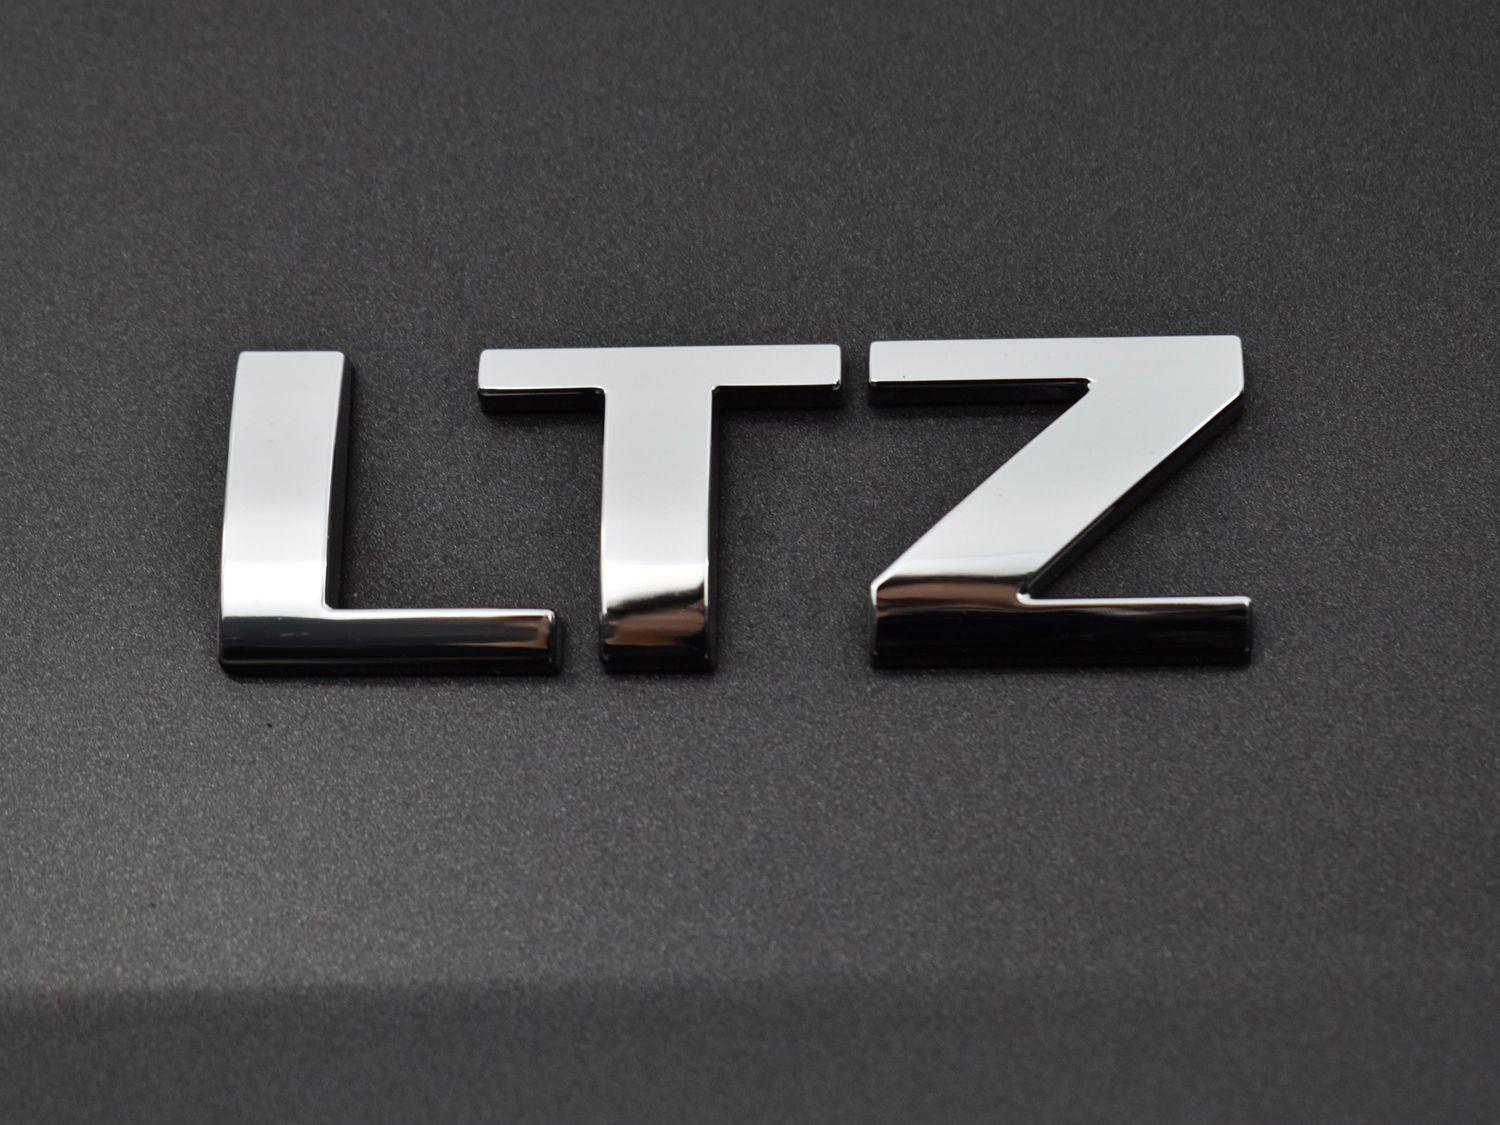 Used 2016 Chevrolet Tahoe LTZ SUV for sale in Grand Island NE